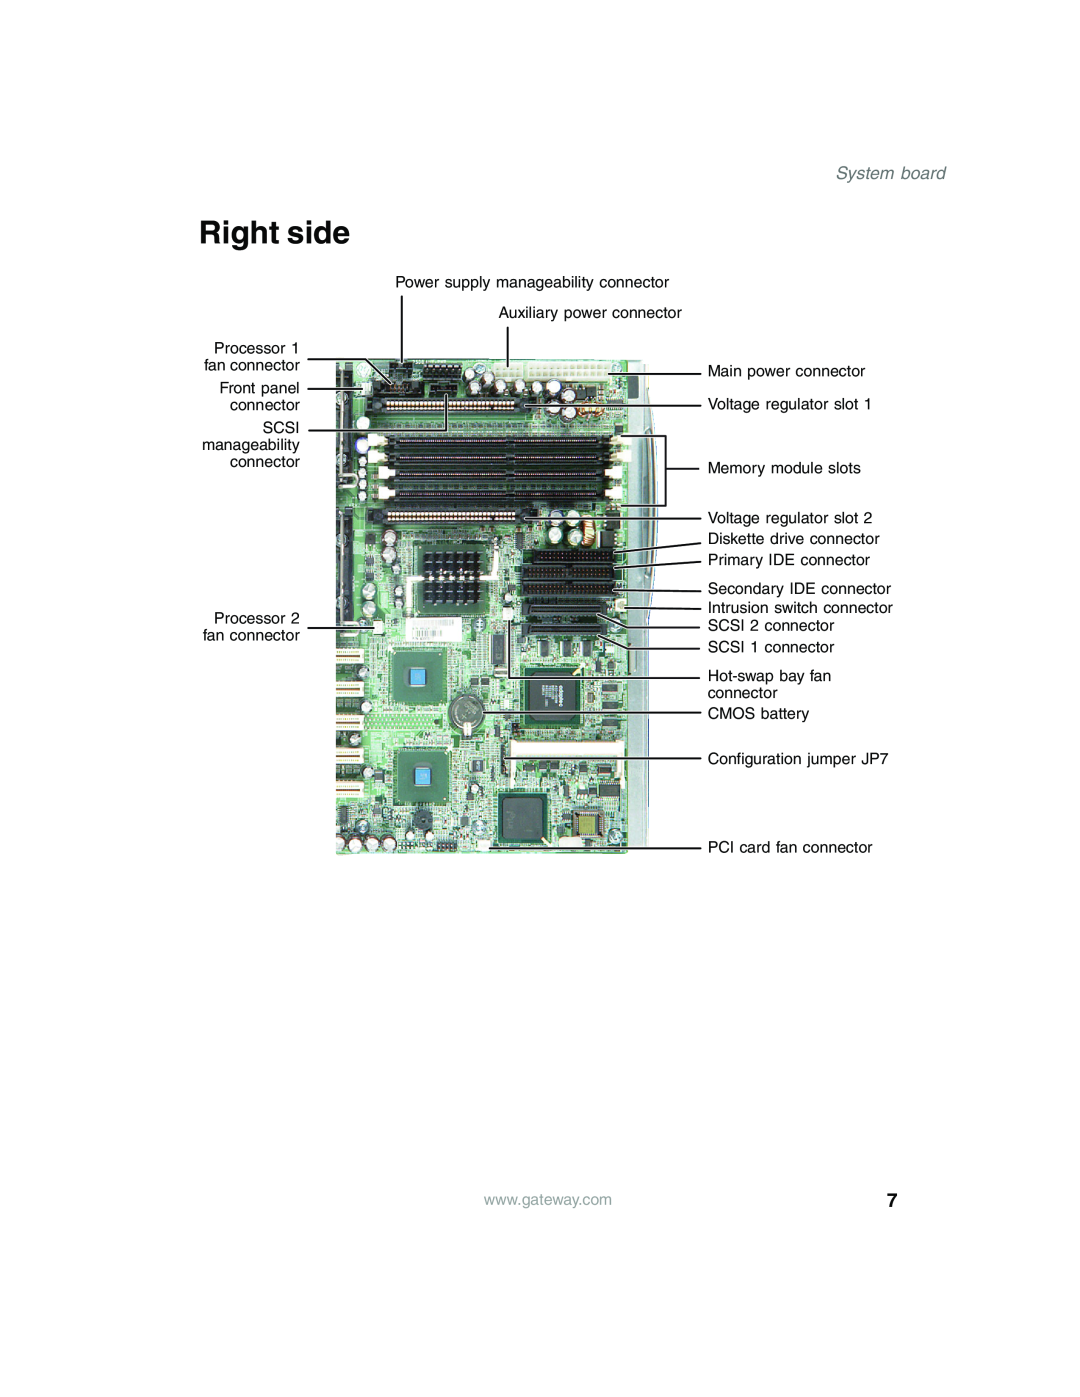 Gateway 960 manual Right side, System board 